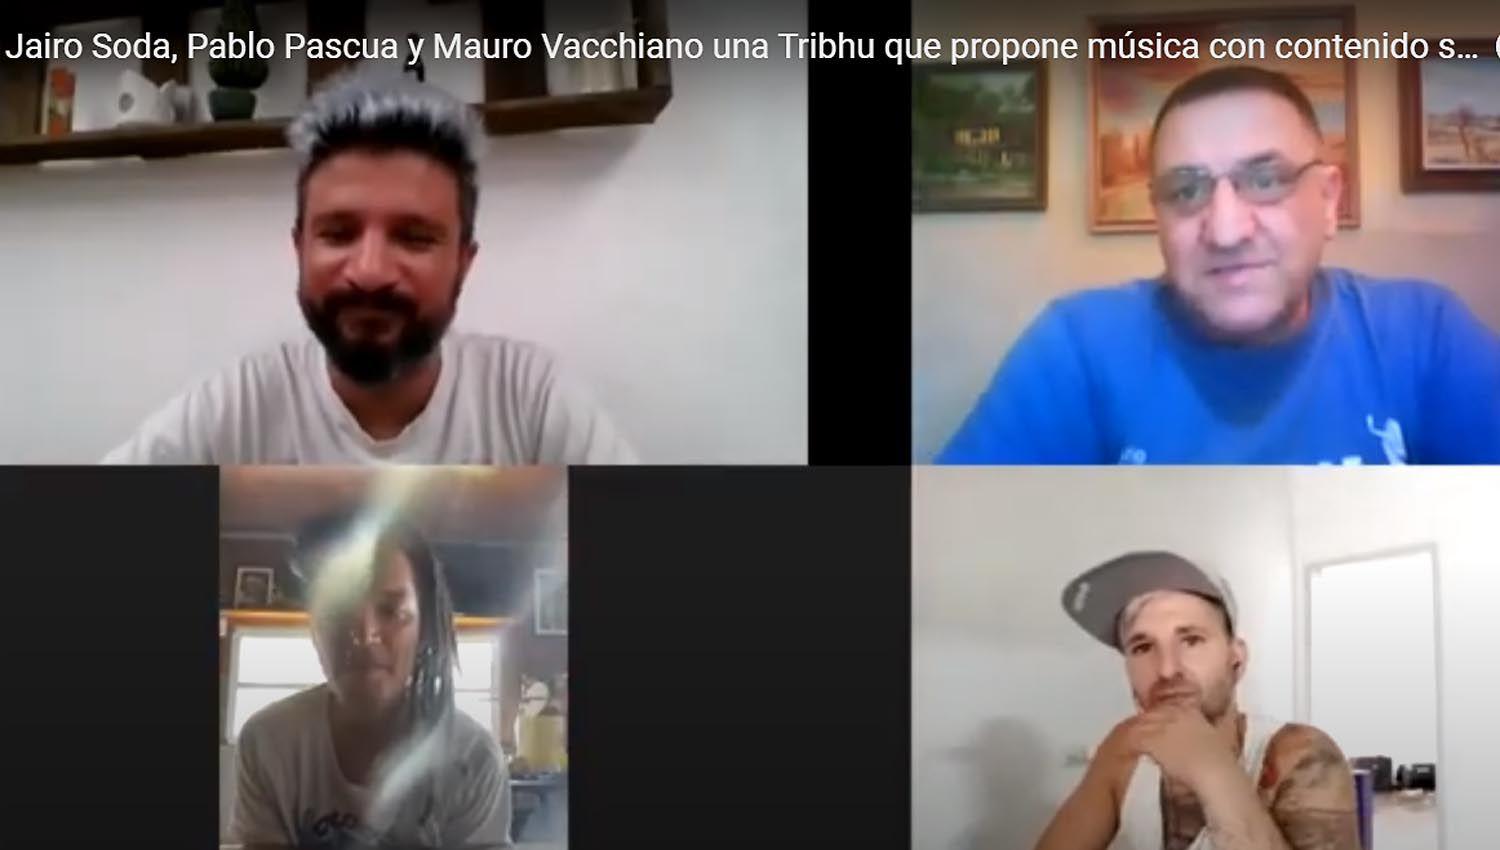 Jairo Soda Pablo Pascua y Mauro Vacchiano una Tribhu que propone muacutesica con contenido social